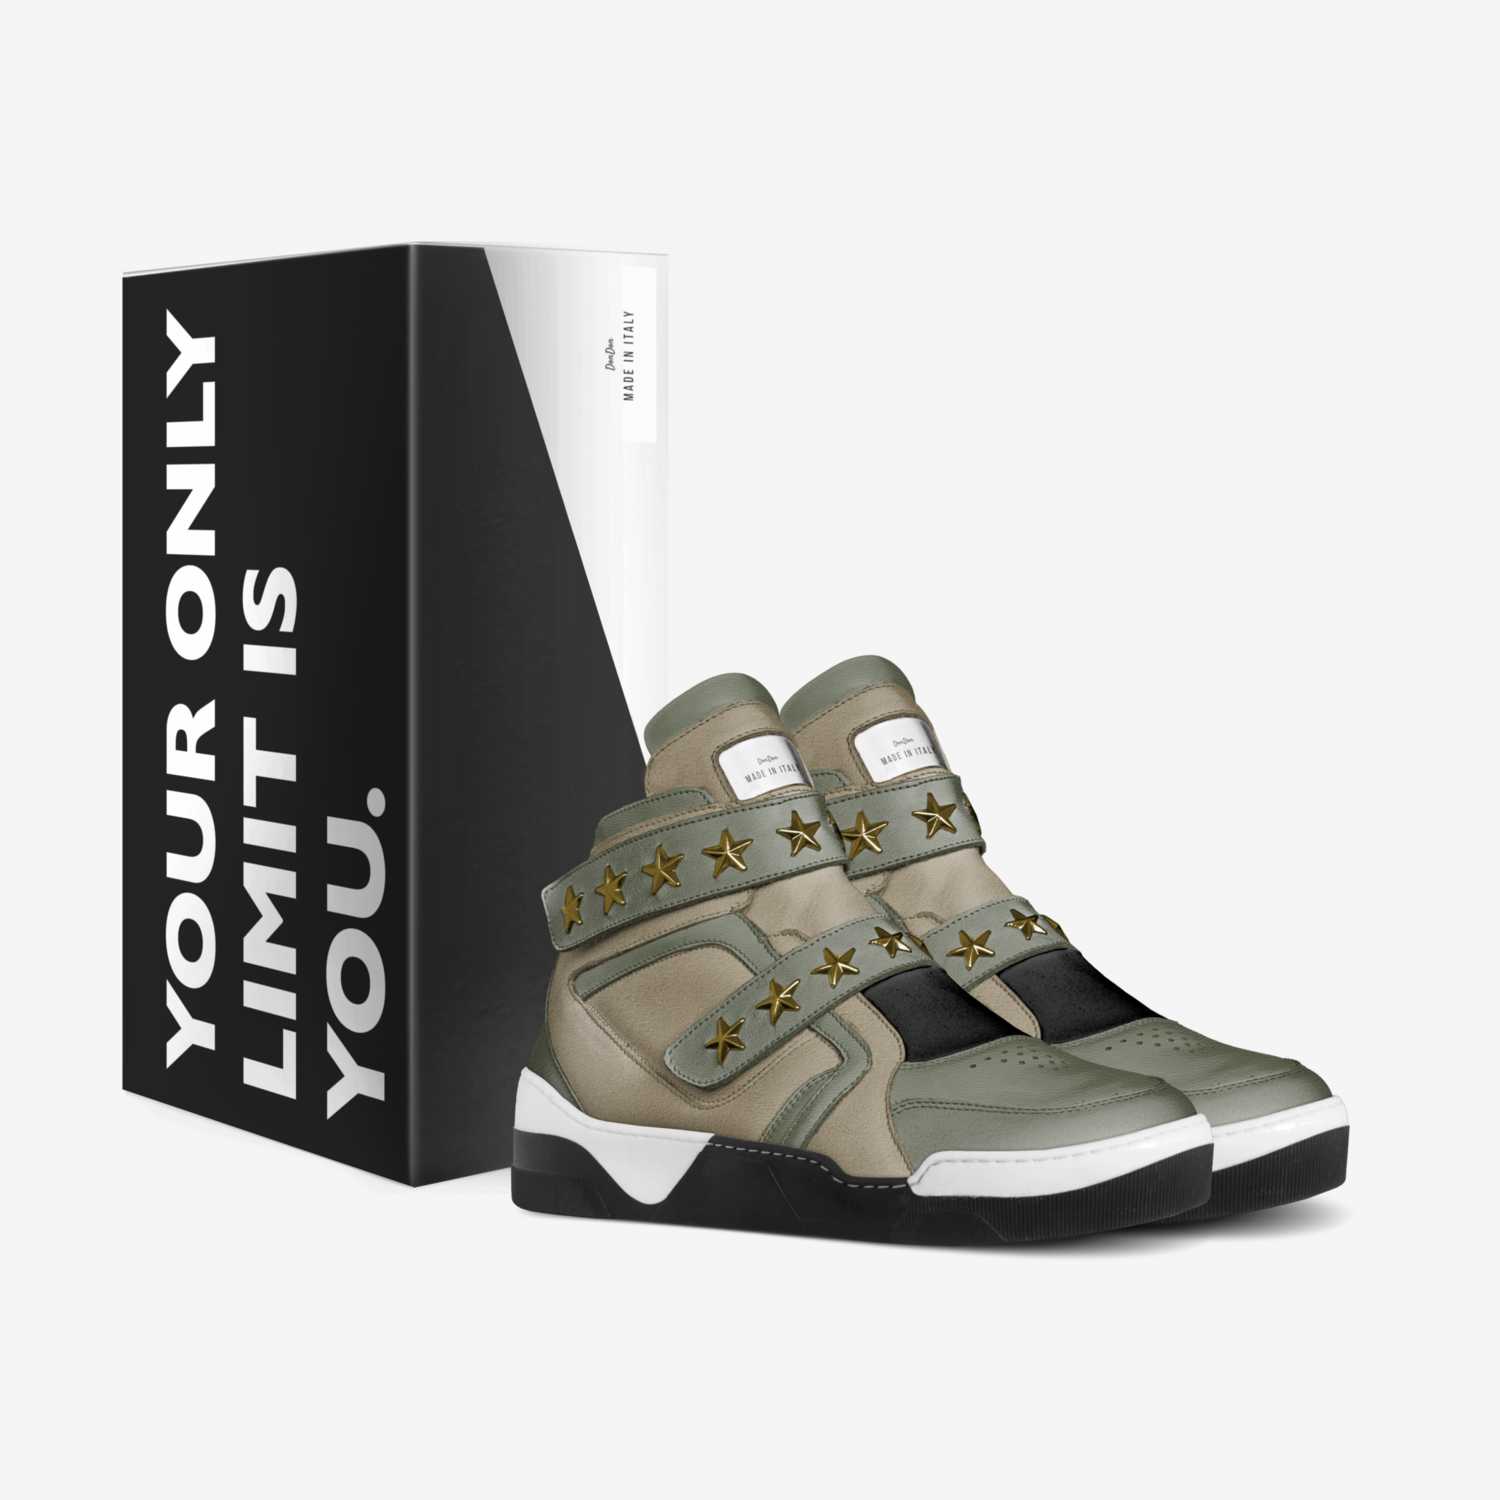 DonDon custom made in Italy shoes by Shantel Nashae | Box view